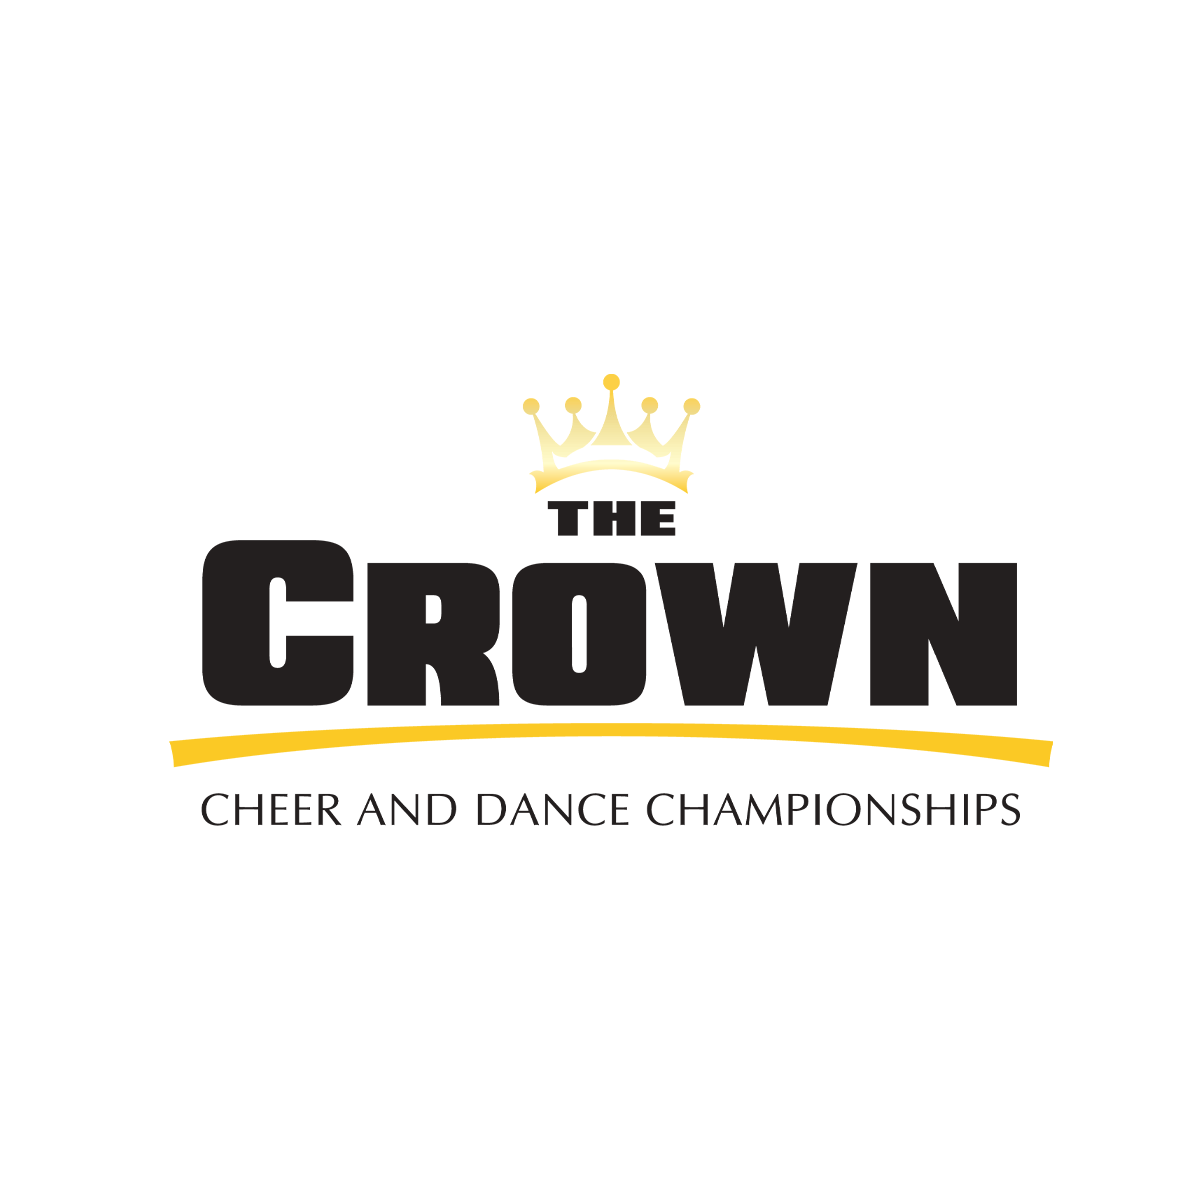 The Texas Crown Championship